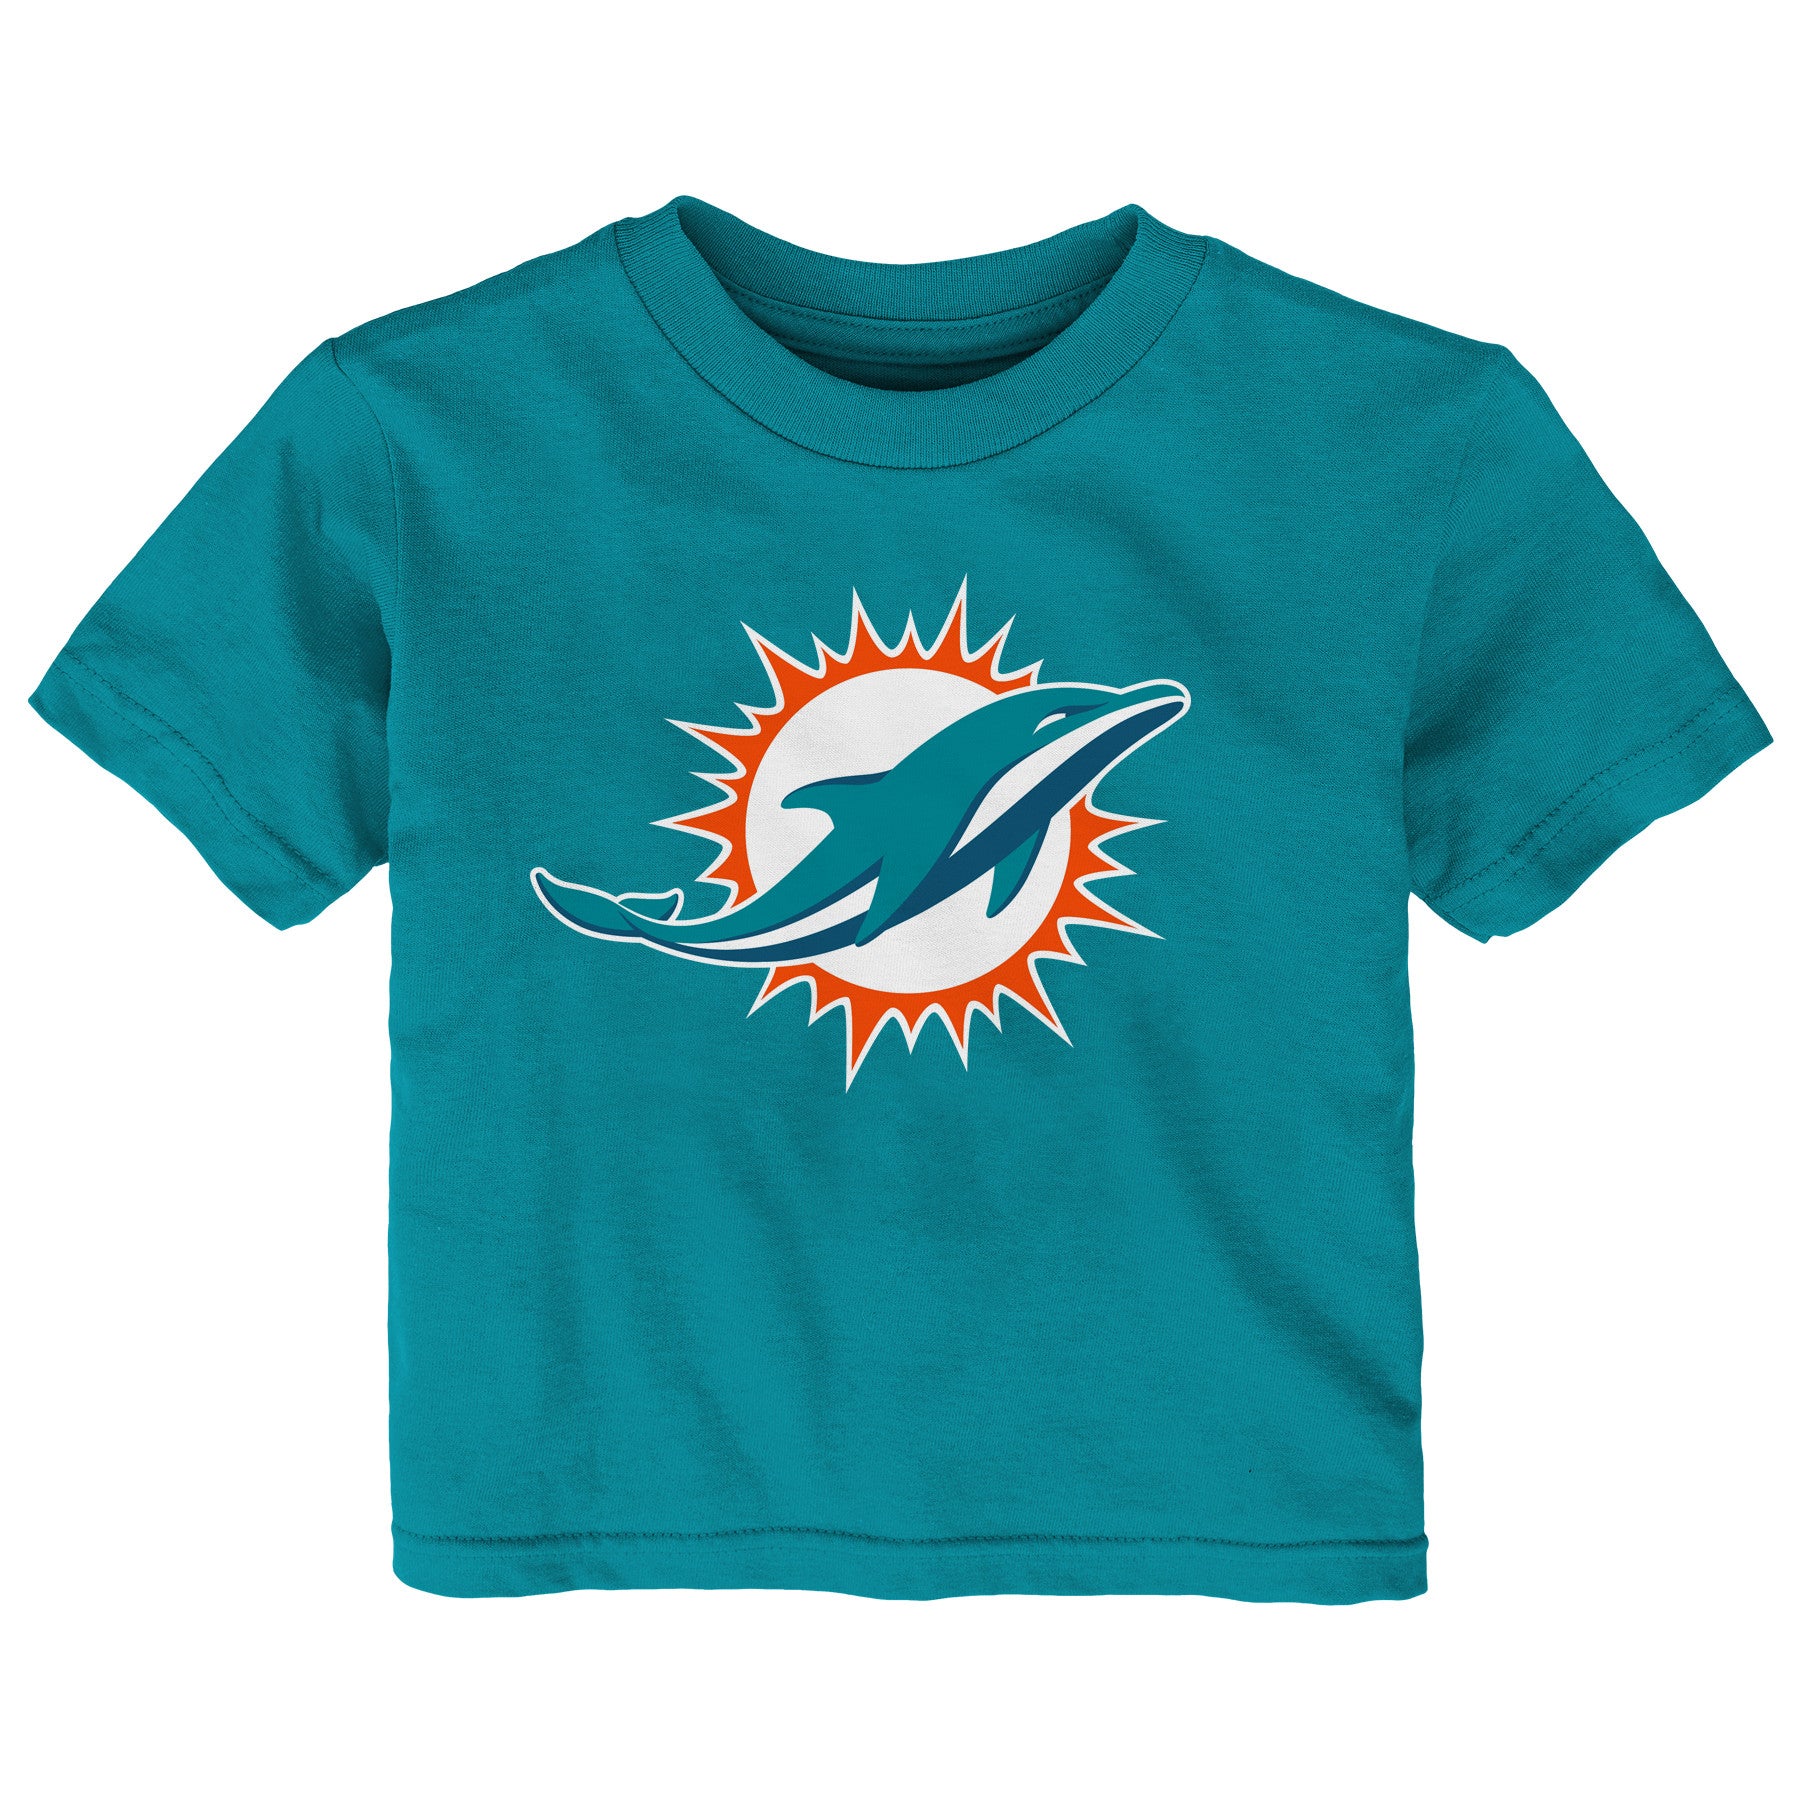 Miami Dolphins Toddler T-Shirt - Aqua